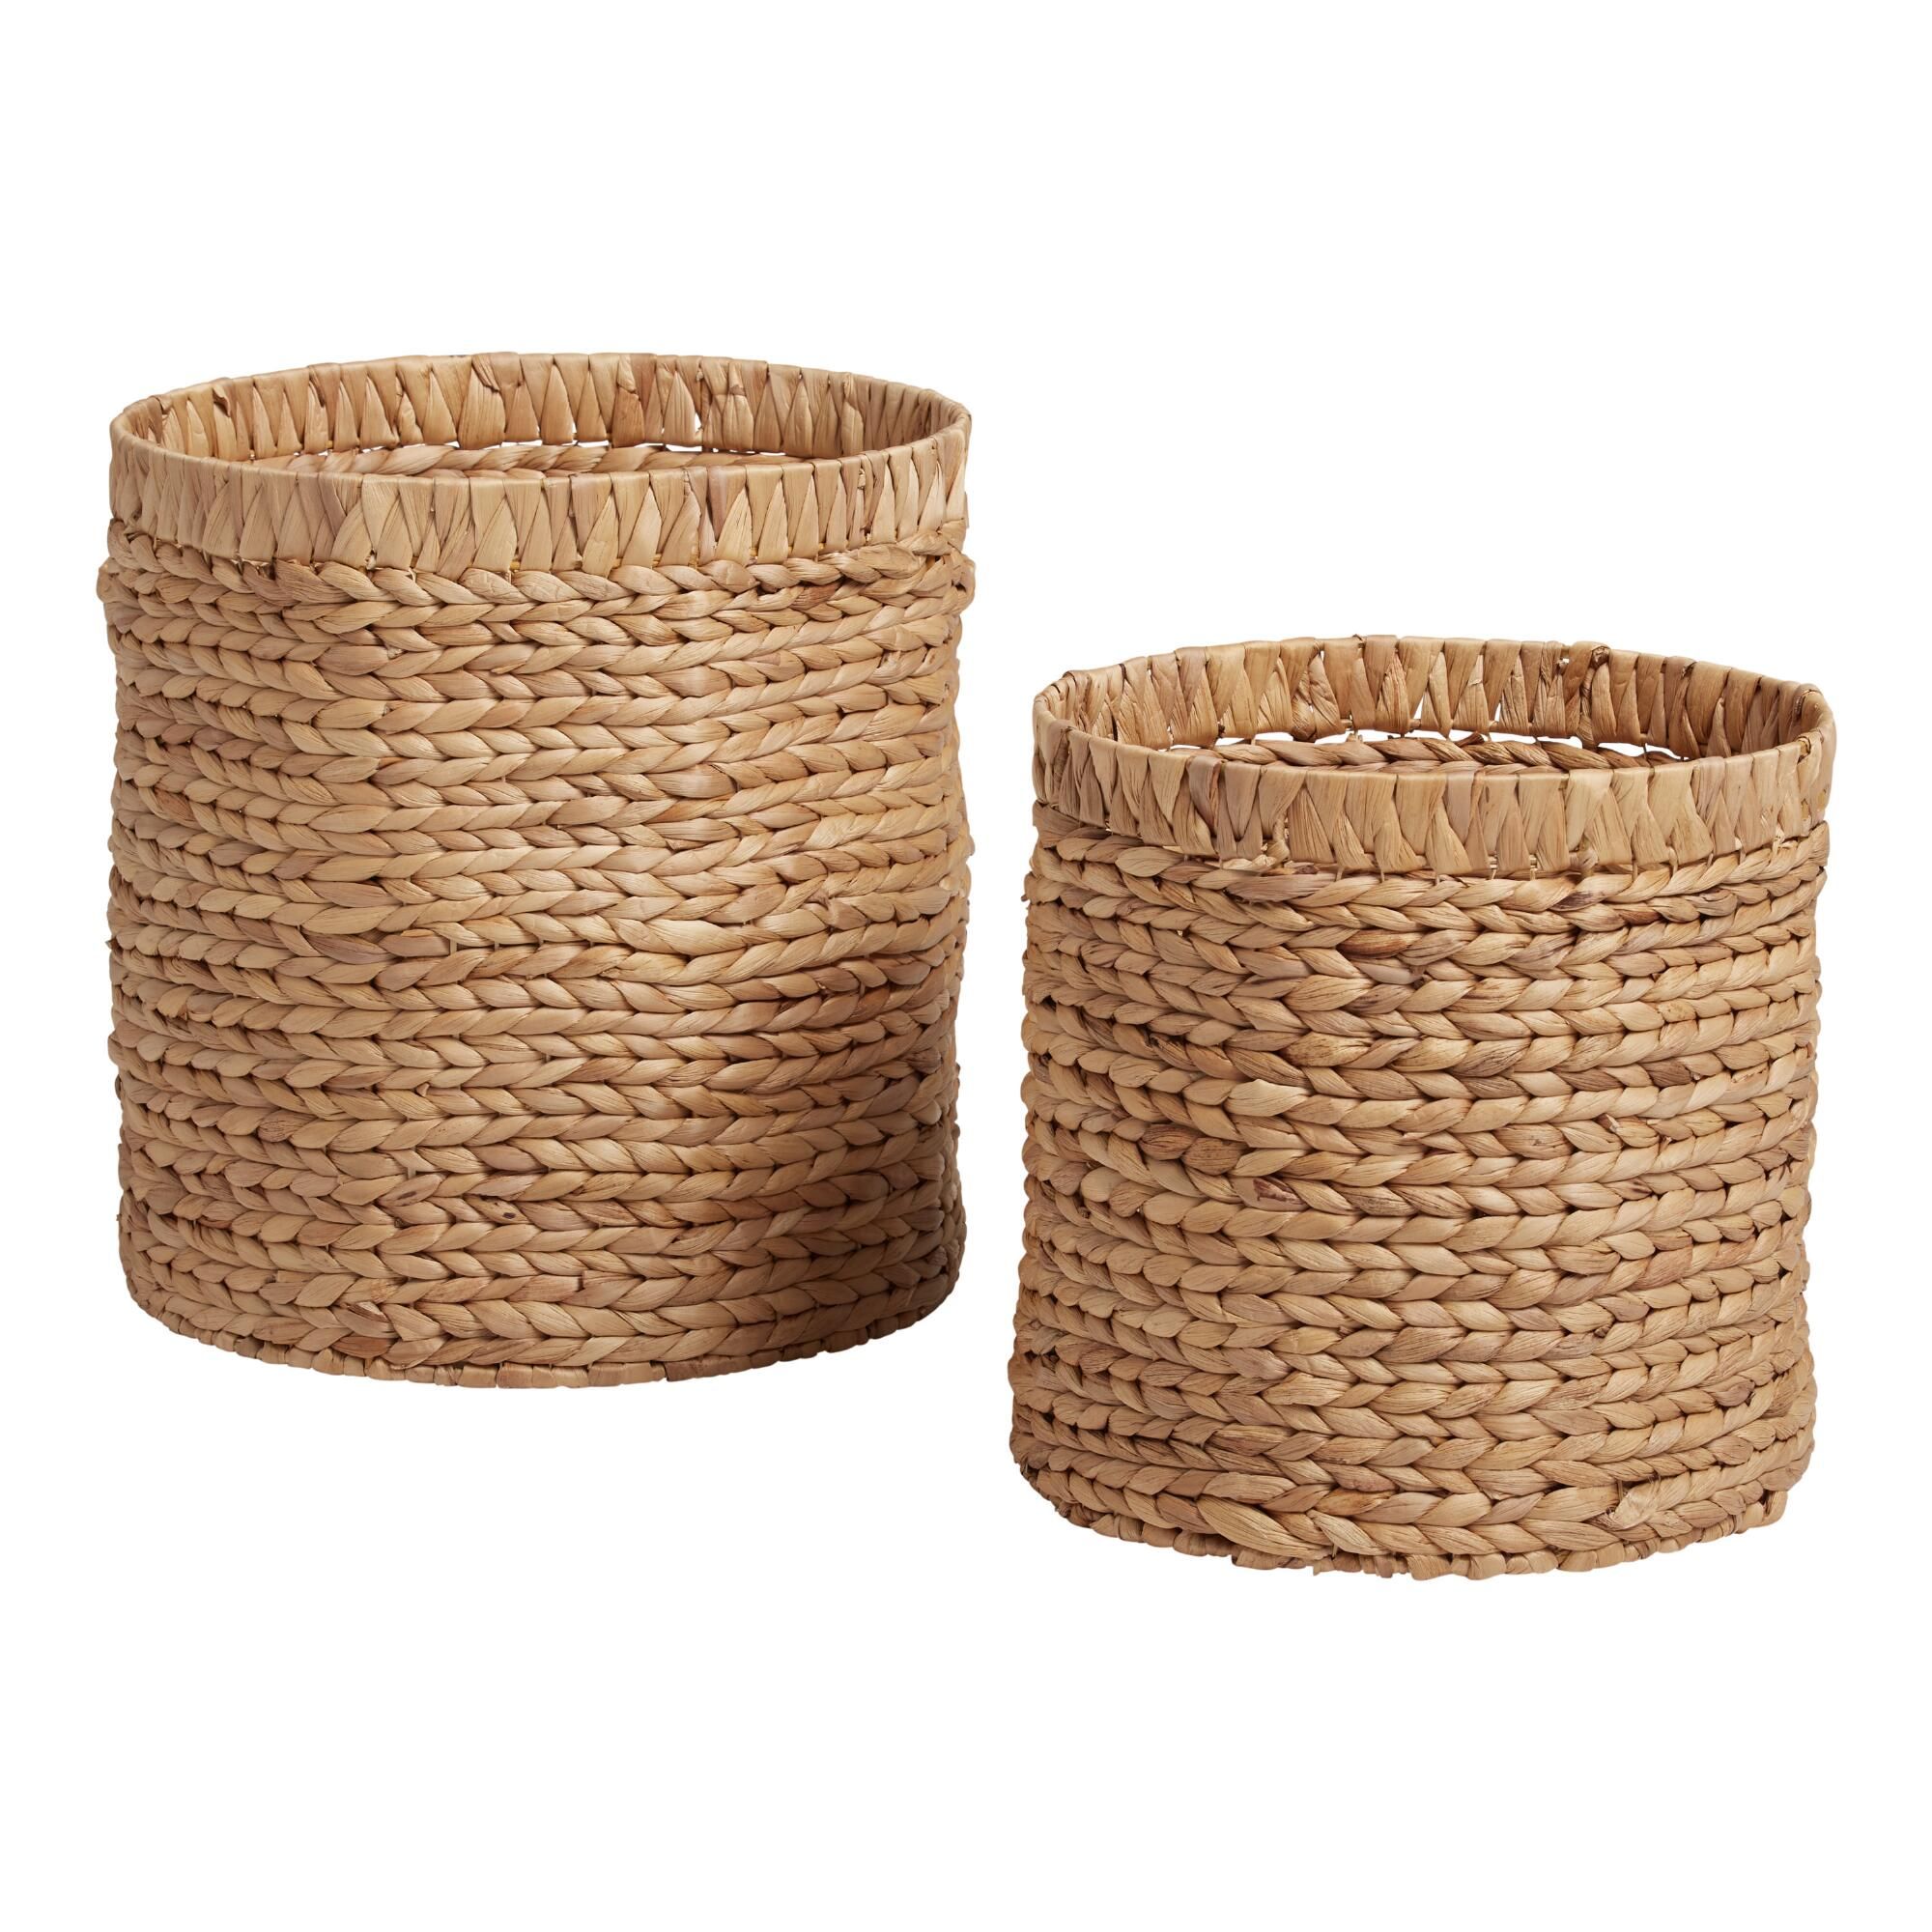 Natural Hyacinth Keely Tote Basket - Large by World Market | World Market